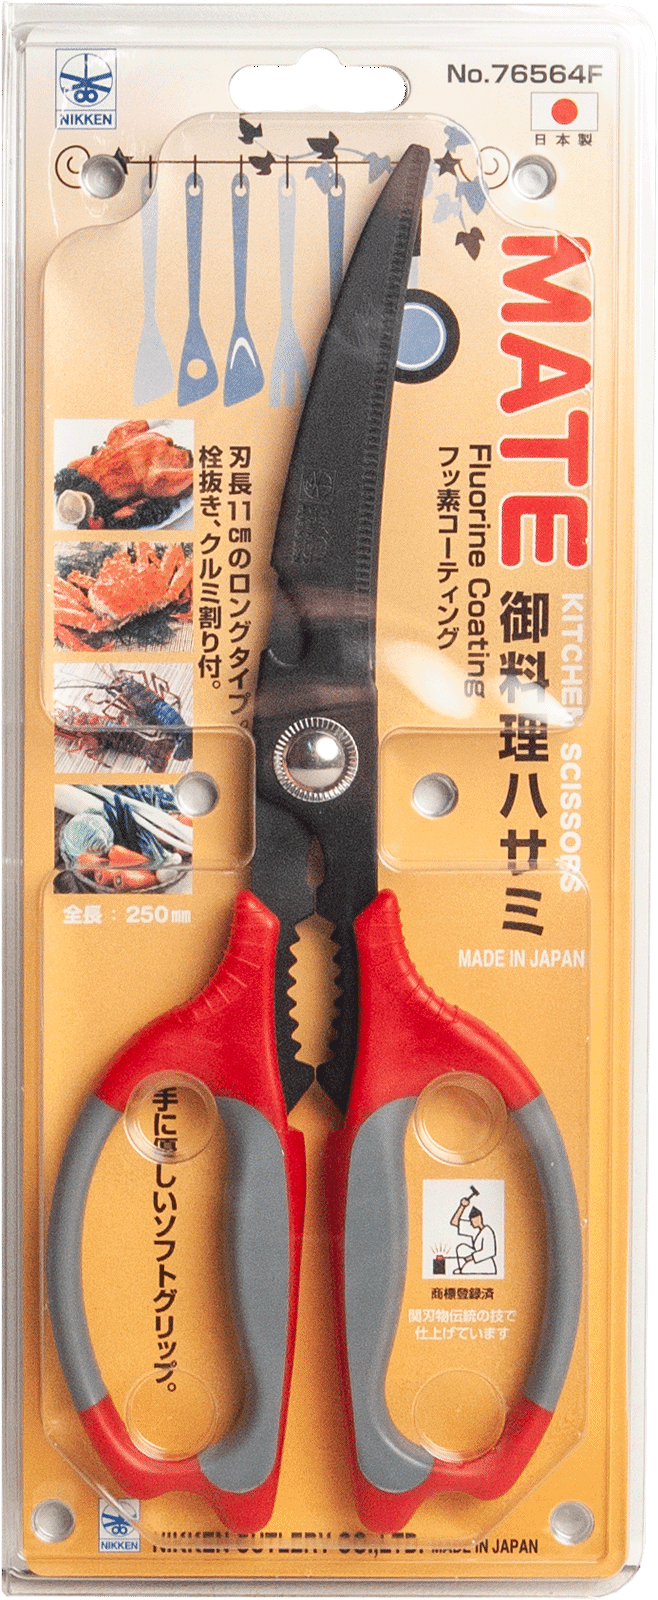 Japanese scissors Curved blade flourine coated 1